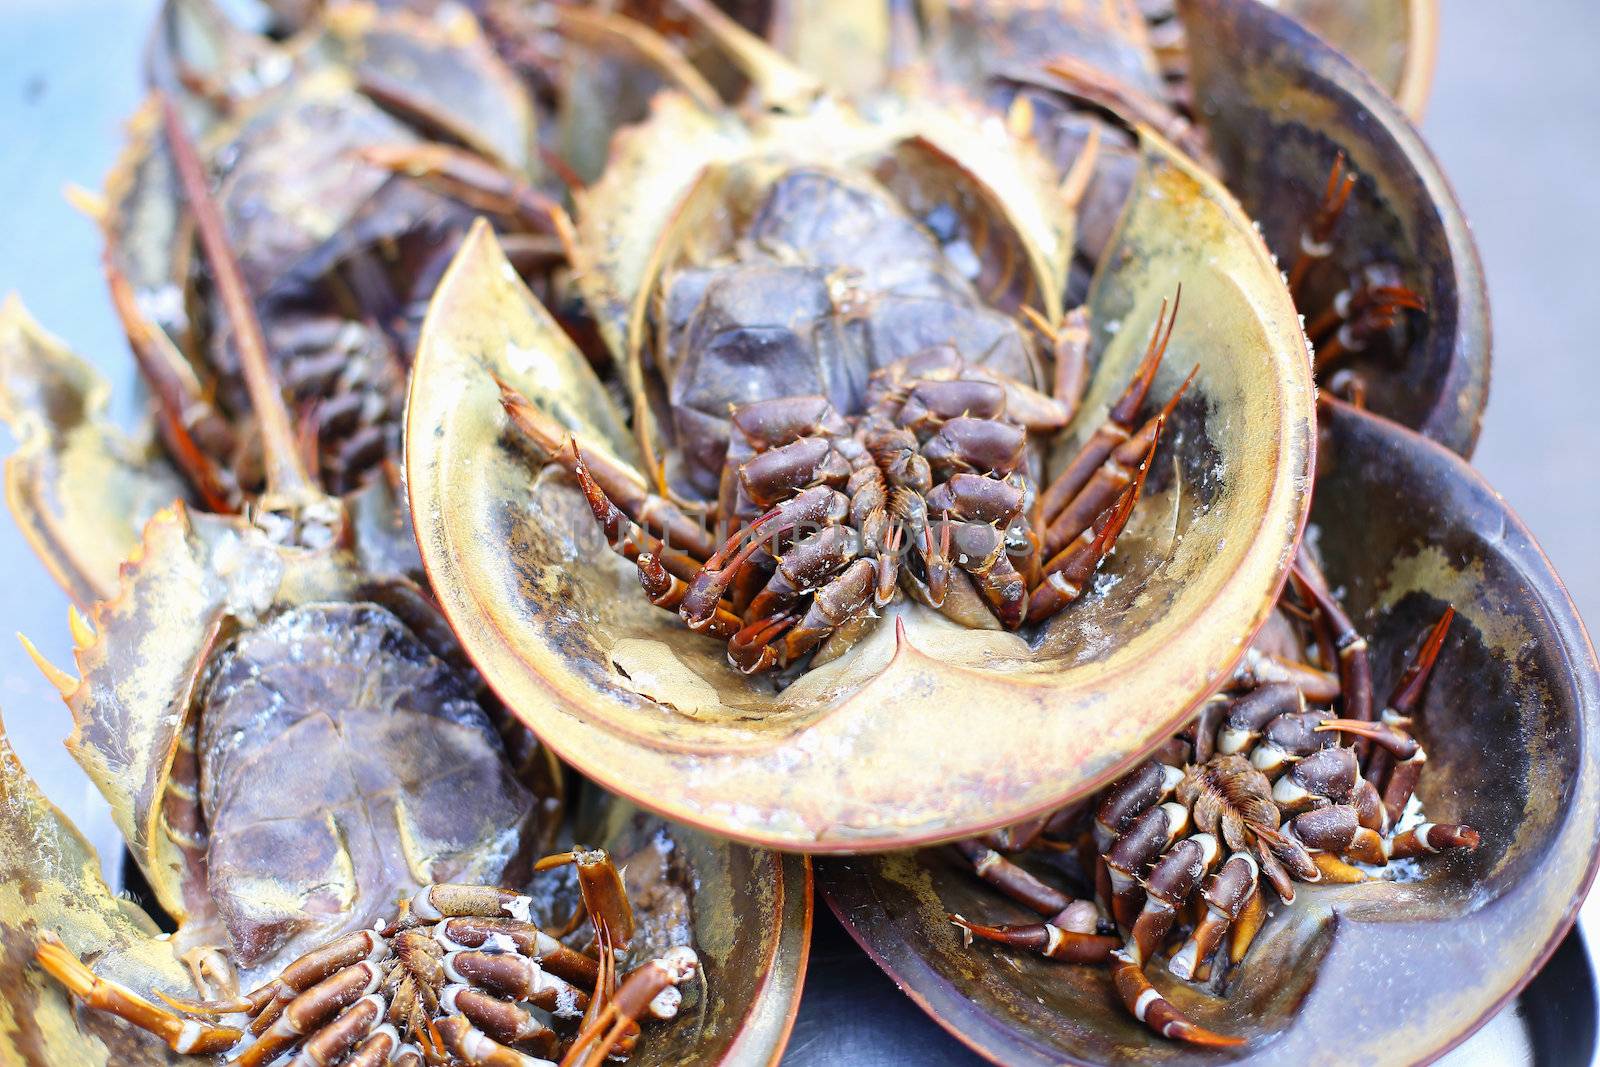 fresh horseshoe crab in market of Thailand